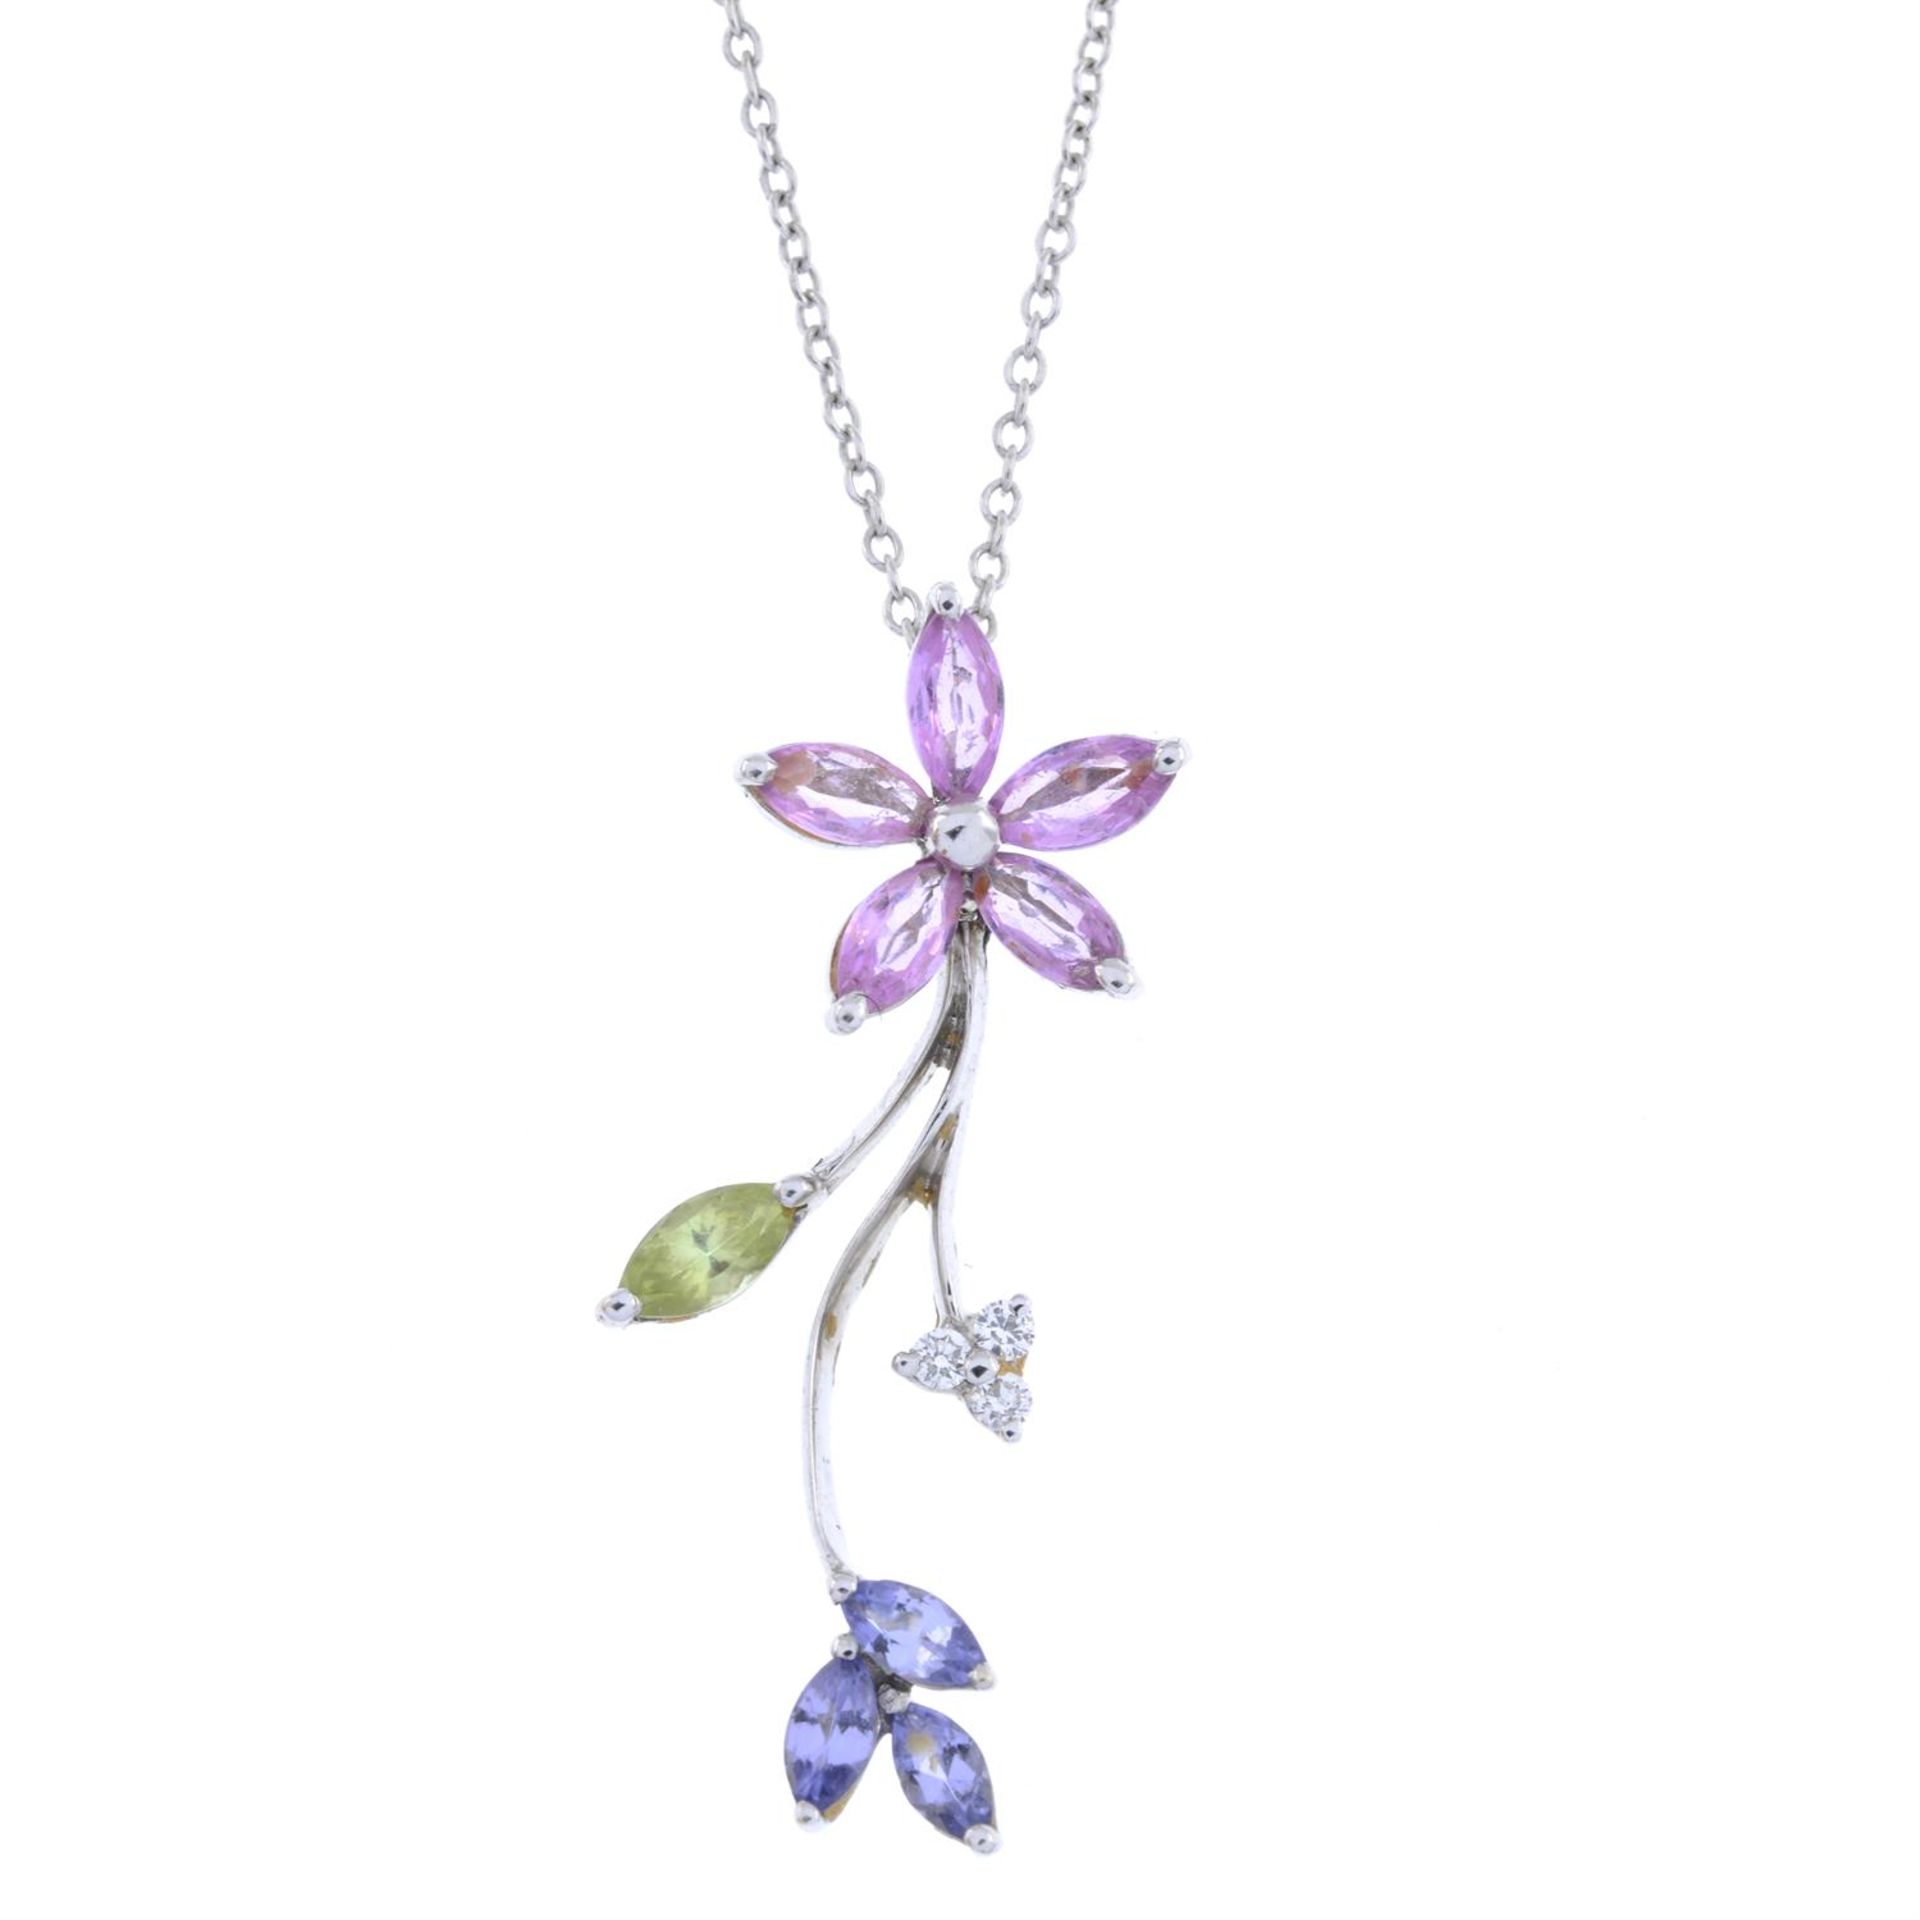 Diamond & vari-hue gem floral pendant, with chain